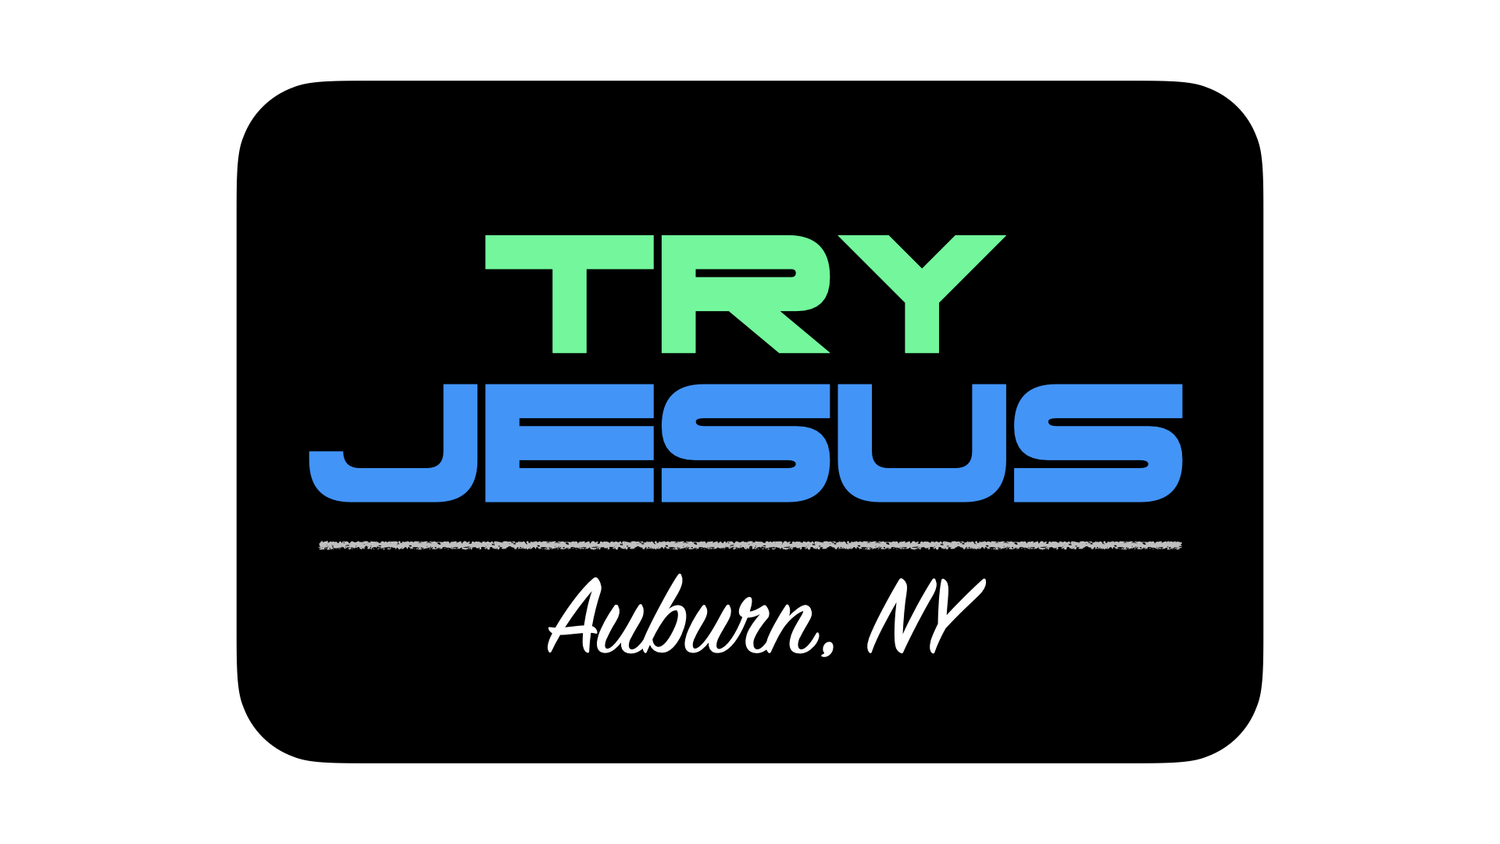 Try Jesus Auburn